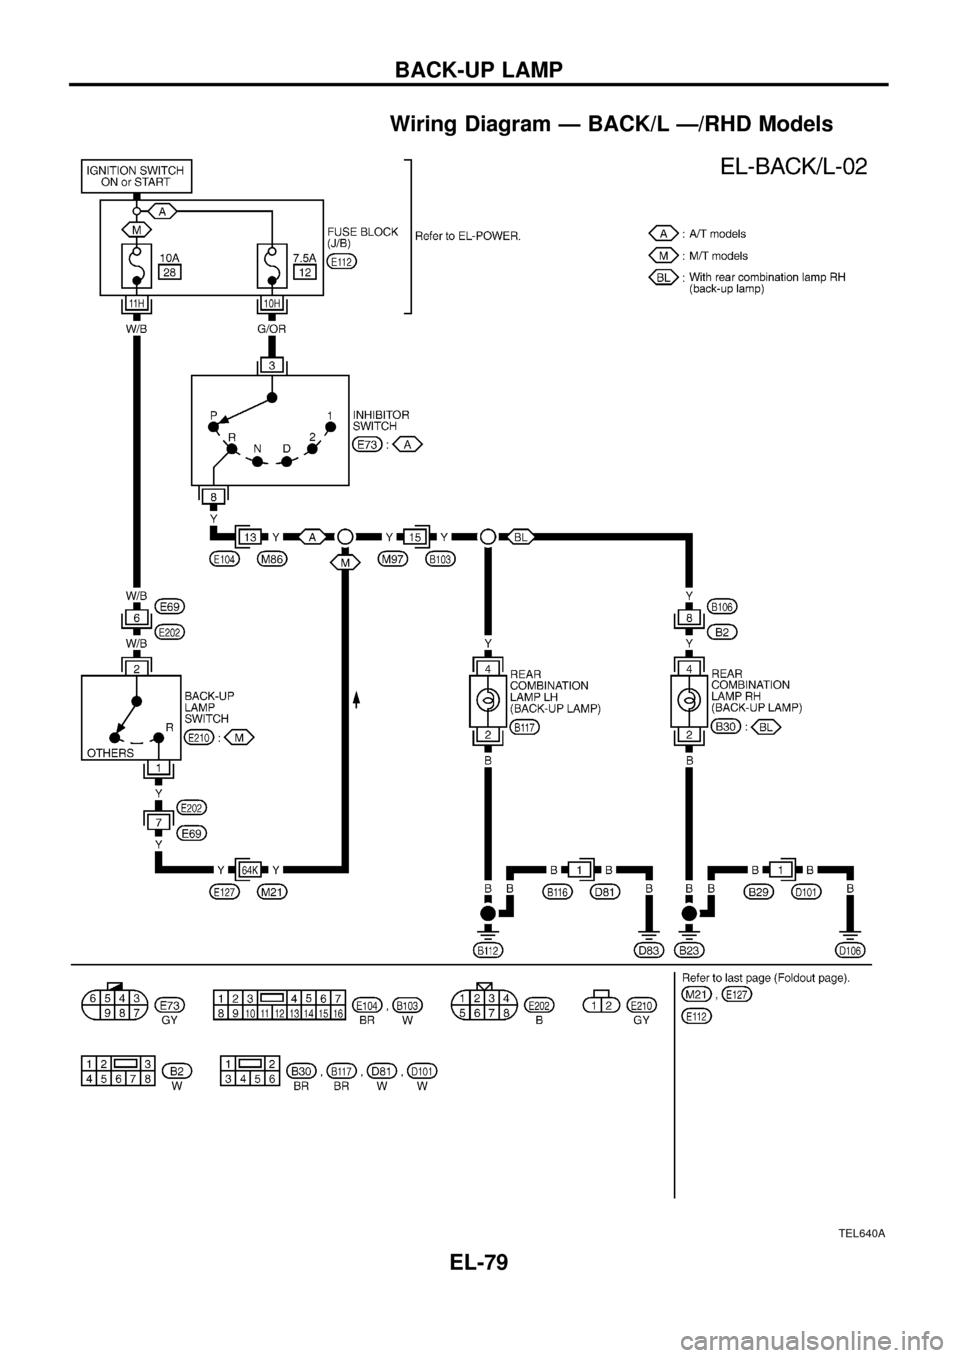 NISSAN PATROL 1998 Y61 / 5.G Electrical System Owners Manual Wiring Diagram Ð BACK/L Ð/RHD Models
TEL640A
BACK-UP LAMP
EL-79 